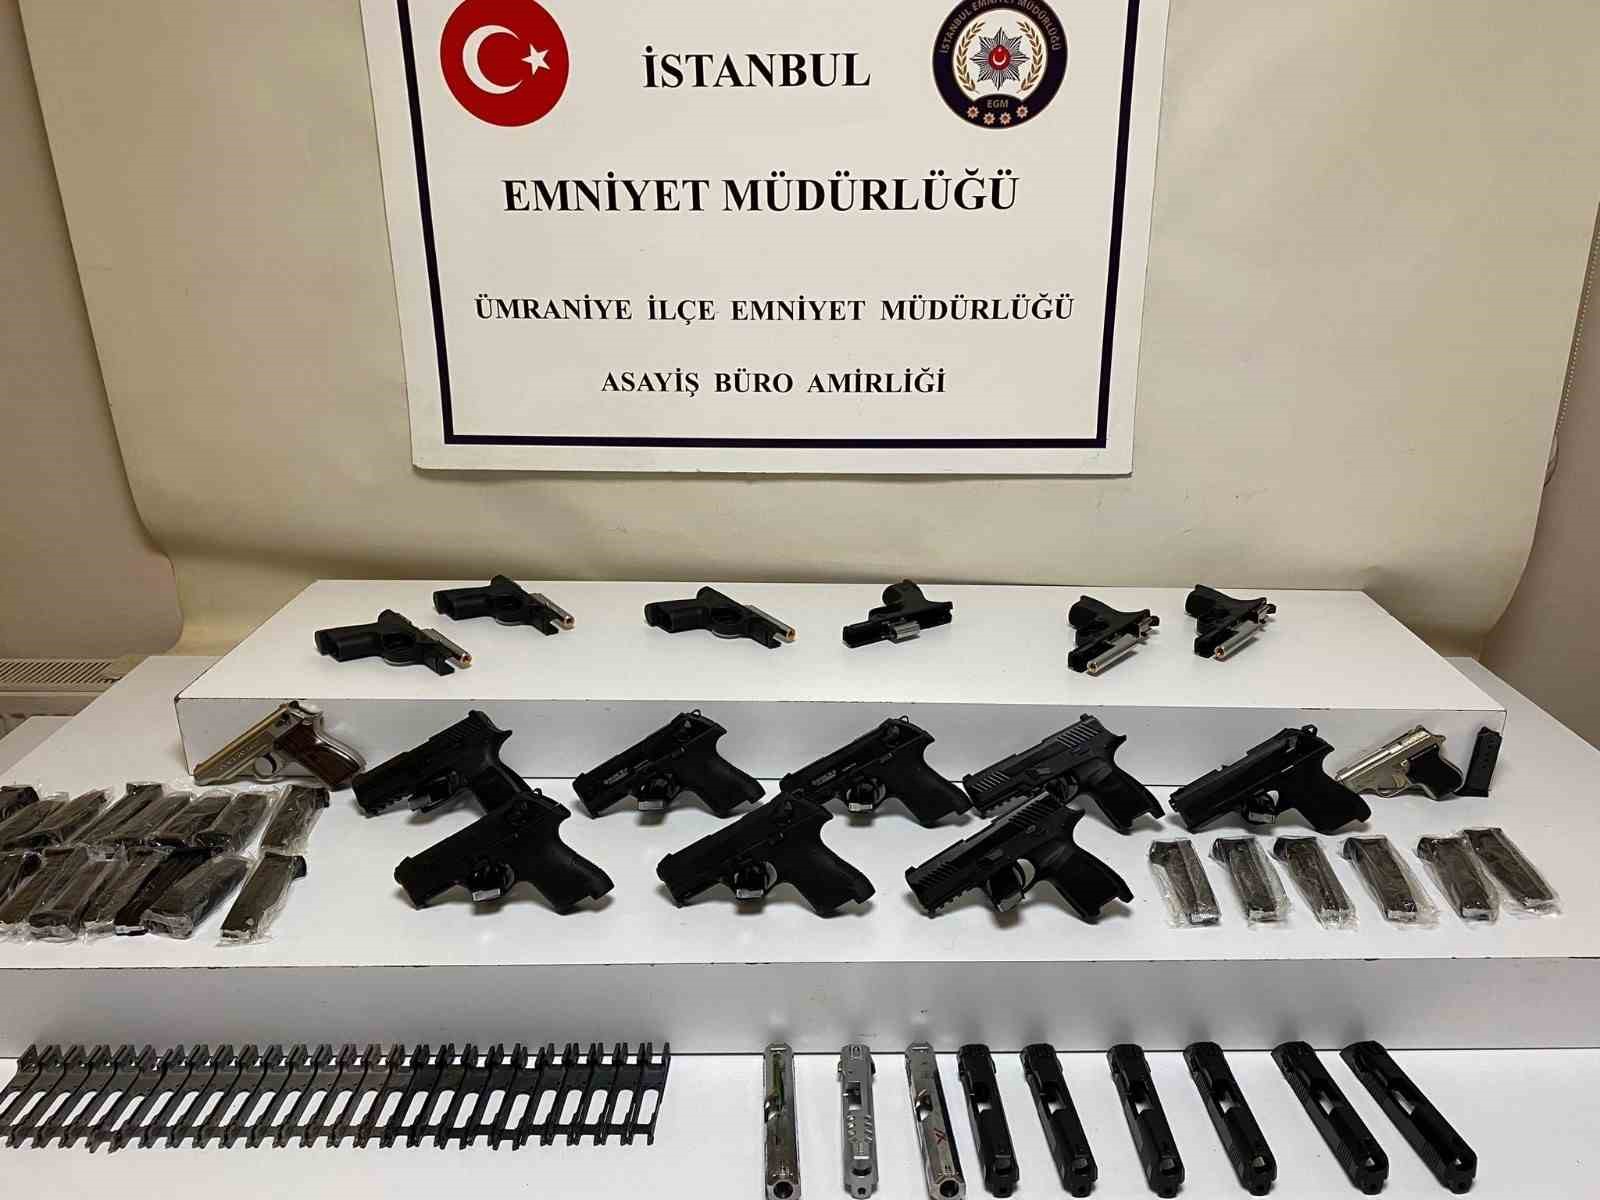 istanbulda yasa disi silah ticareti operasyonu 10 silah ele gecirildi 0 625B9bYu